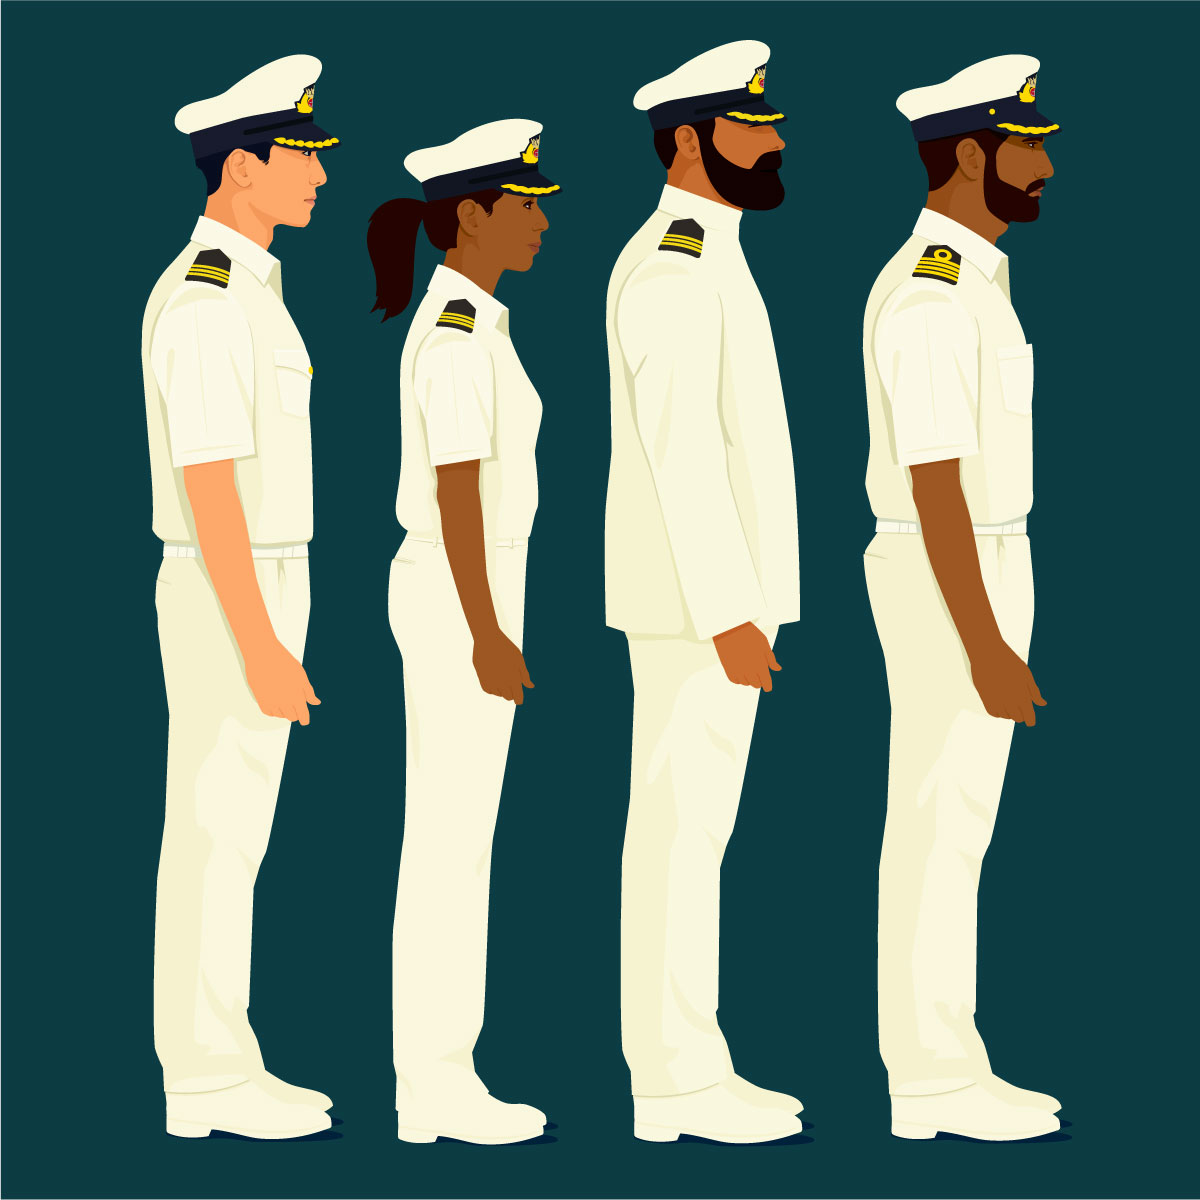 Various ship captains